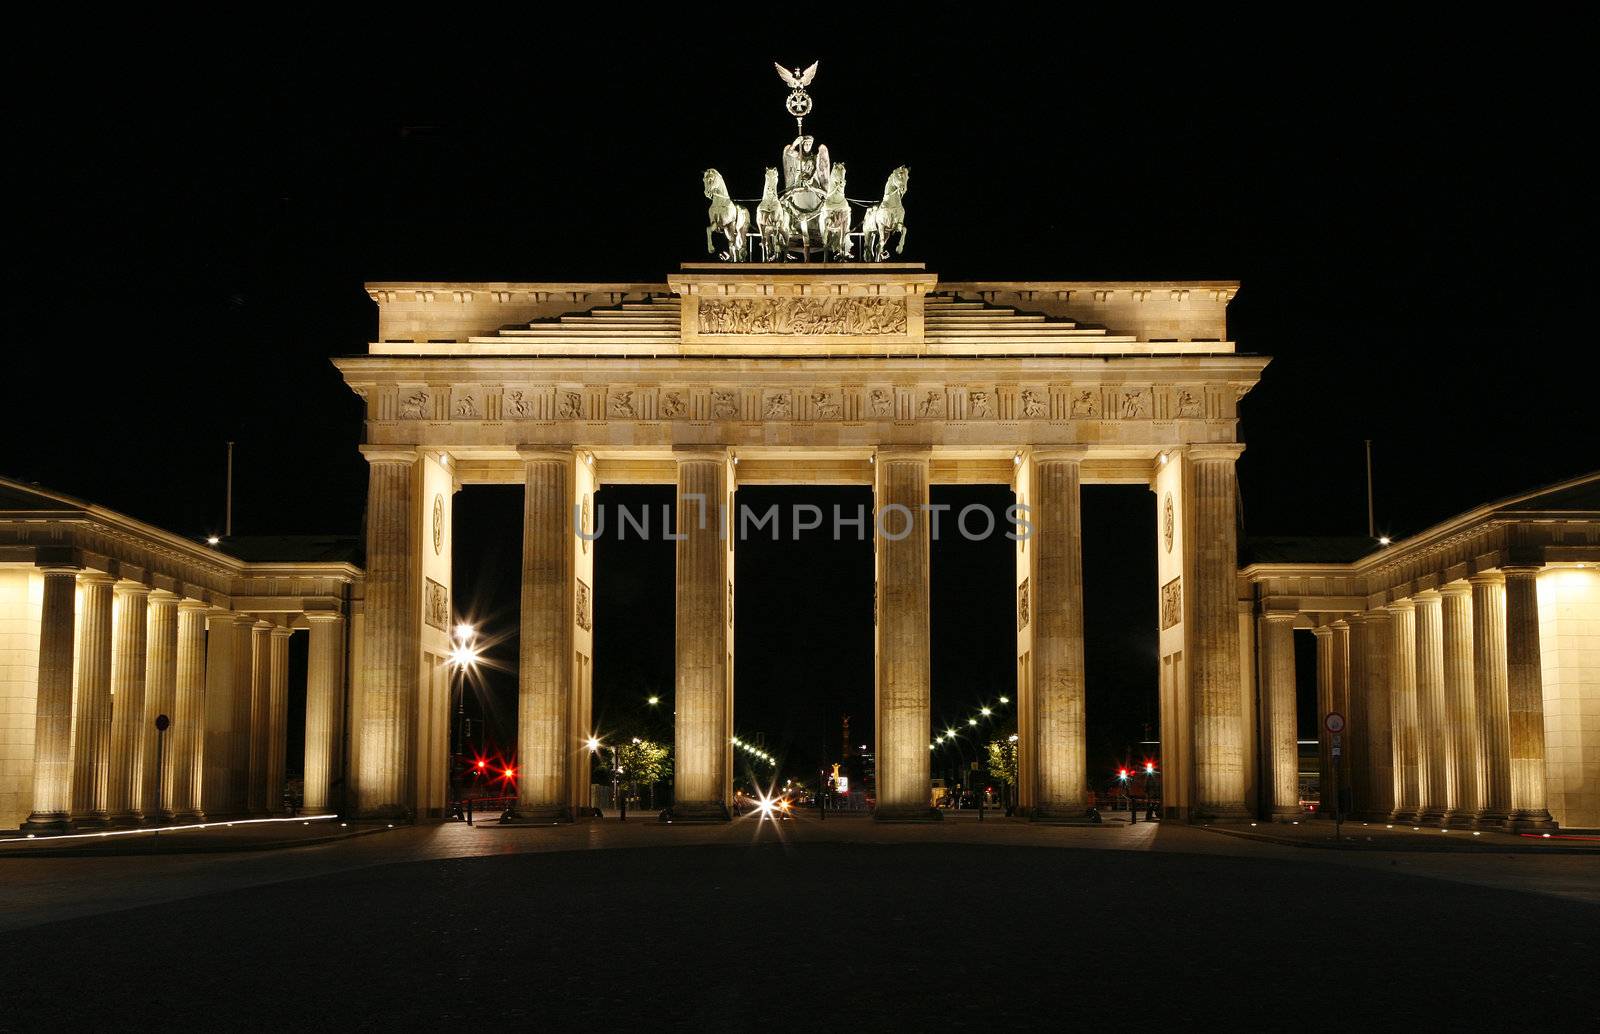 The Brandenburg Gate - Berlin, Germany. by chrisdorney